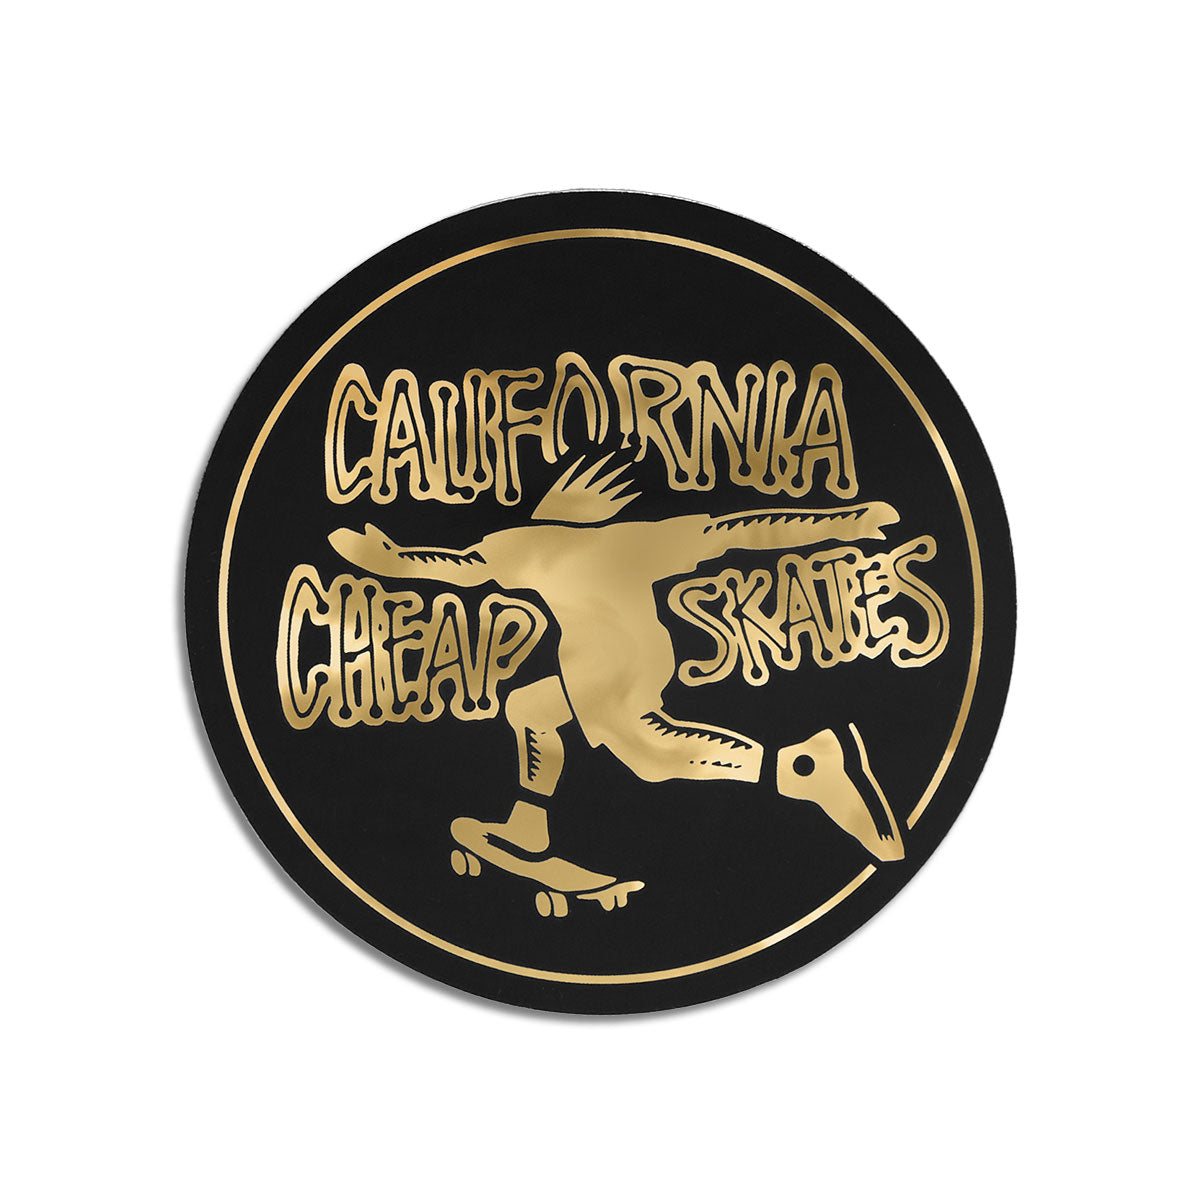 CCS Cheap Skates Sticker - Black/Gold image 1